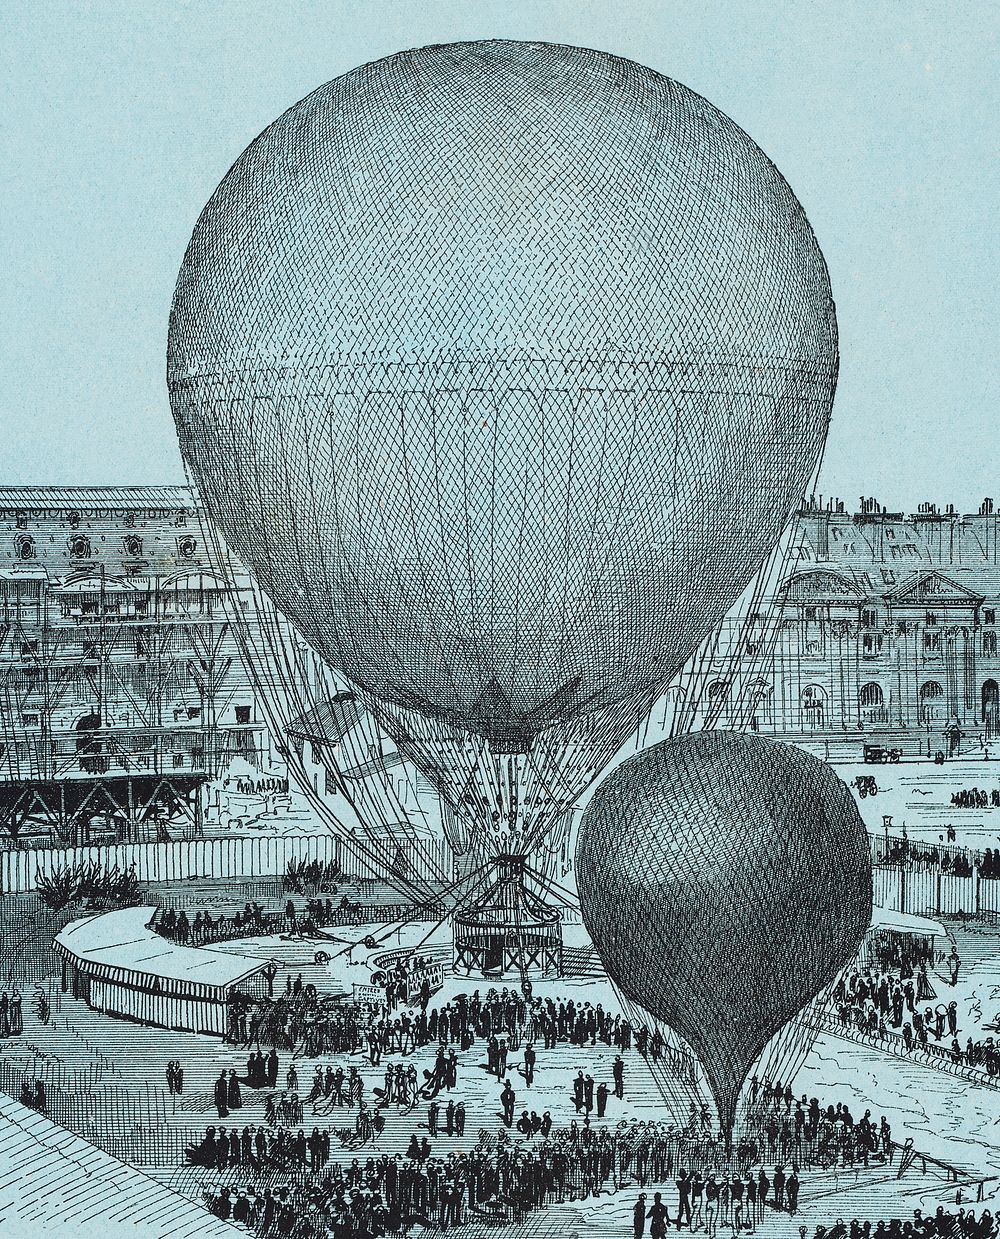 Large Captive Steam Balloon of the Tuileries Courtyard, Paris by artist Henri Gifford (1825-1882) at Lahure, rue de Fleurus…